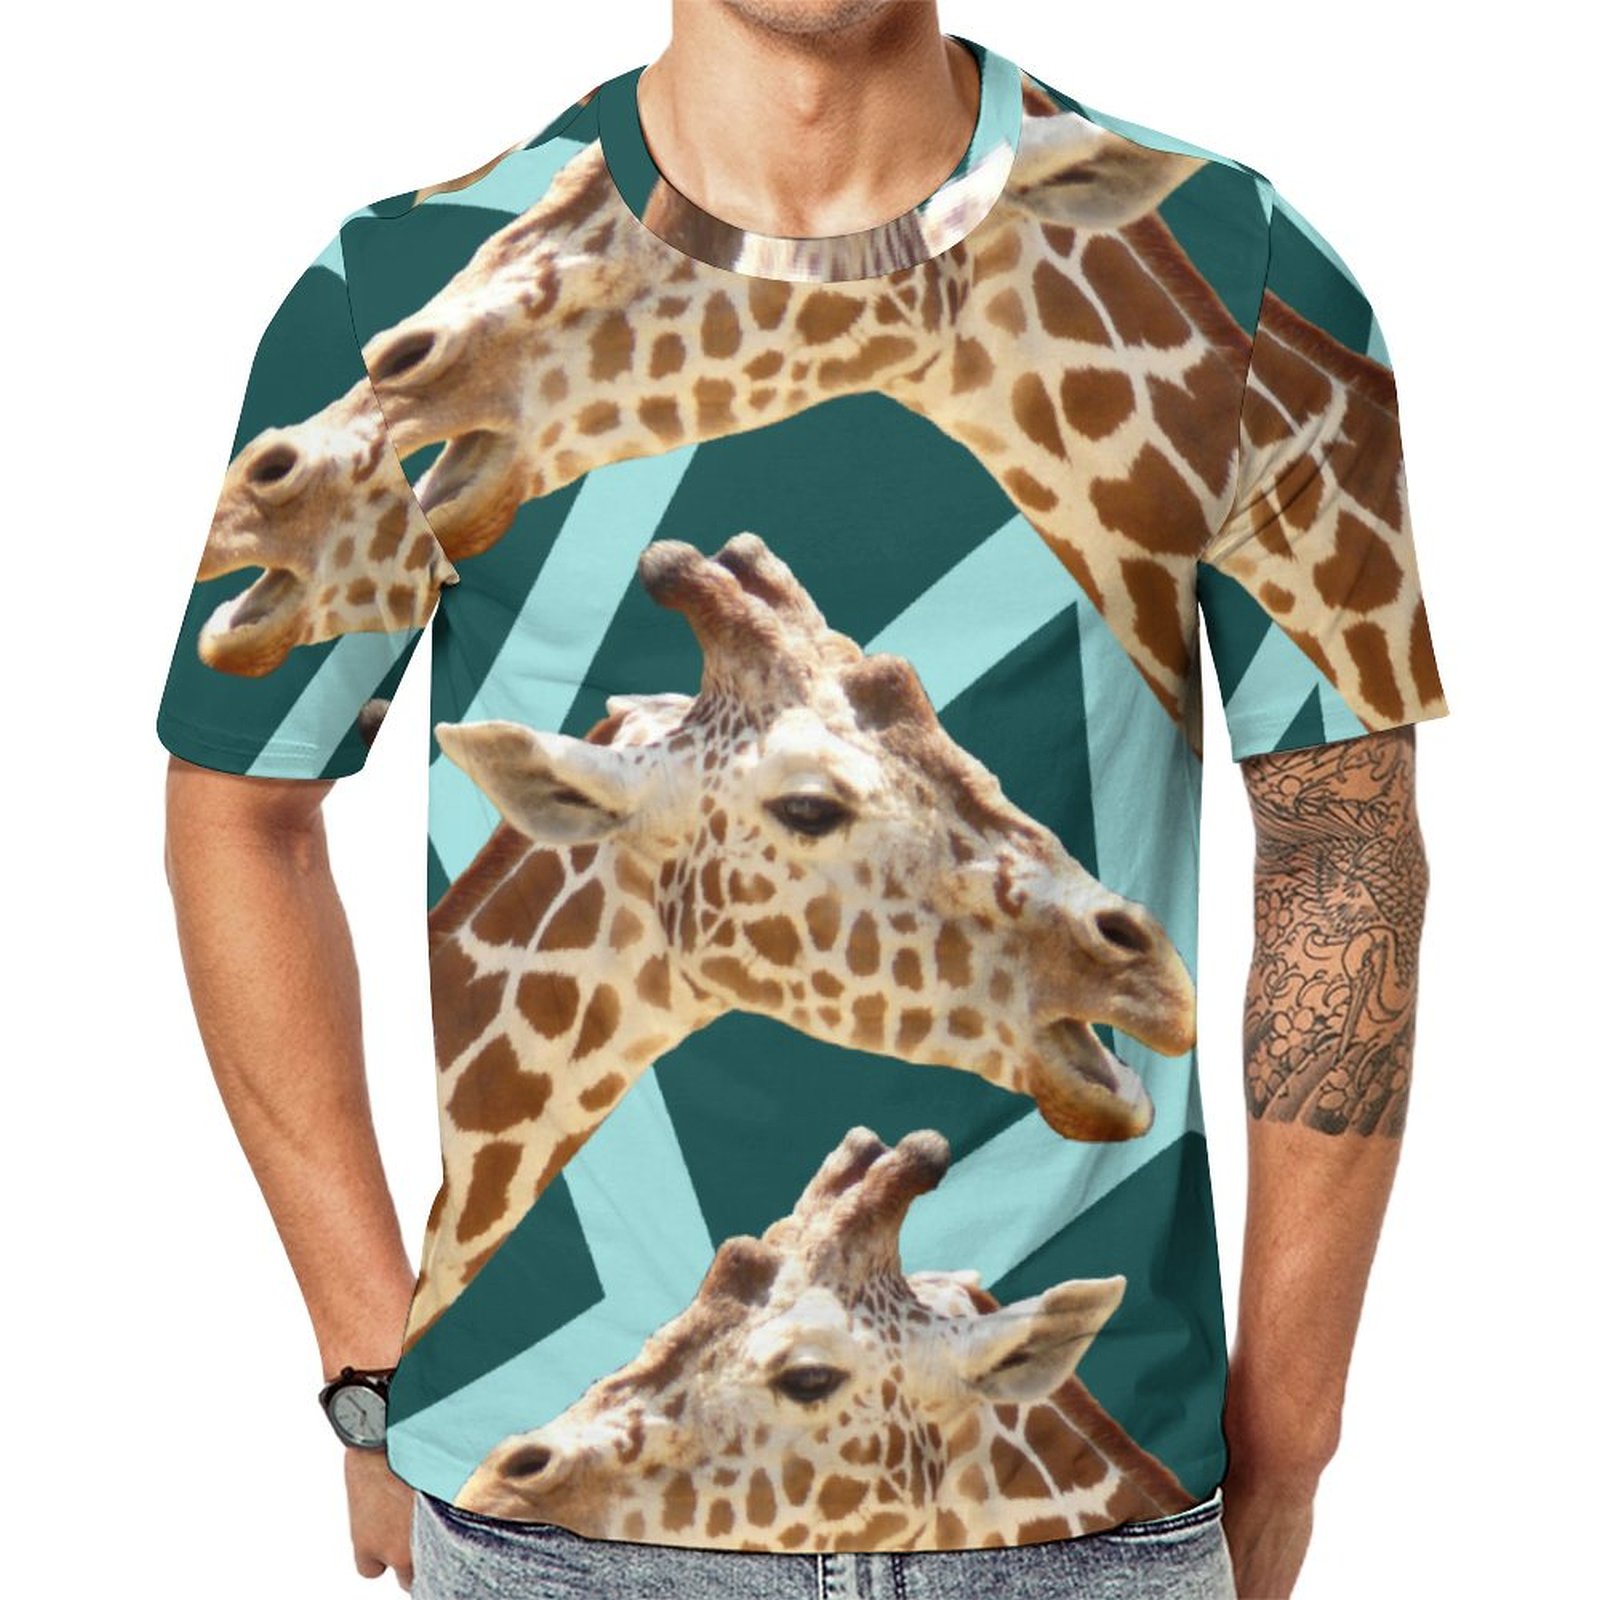 Funny Giraffe Print Teal Blue Wild Animal Short Sleeve Print Unisex Tshirt Summer Casual Tees for Men and Women Coolcoshirts